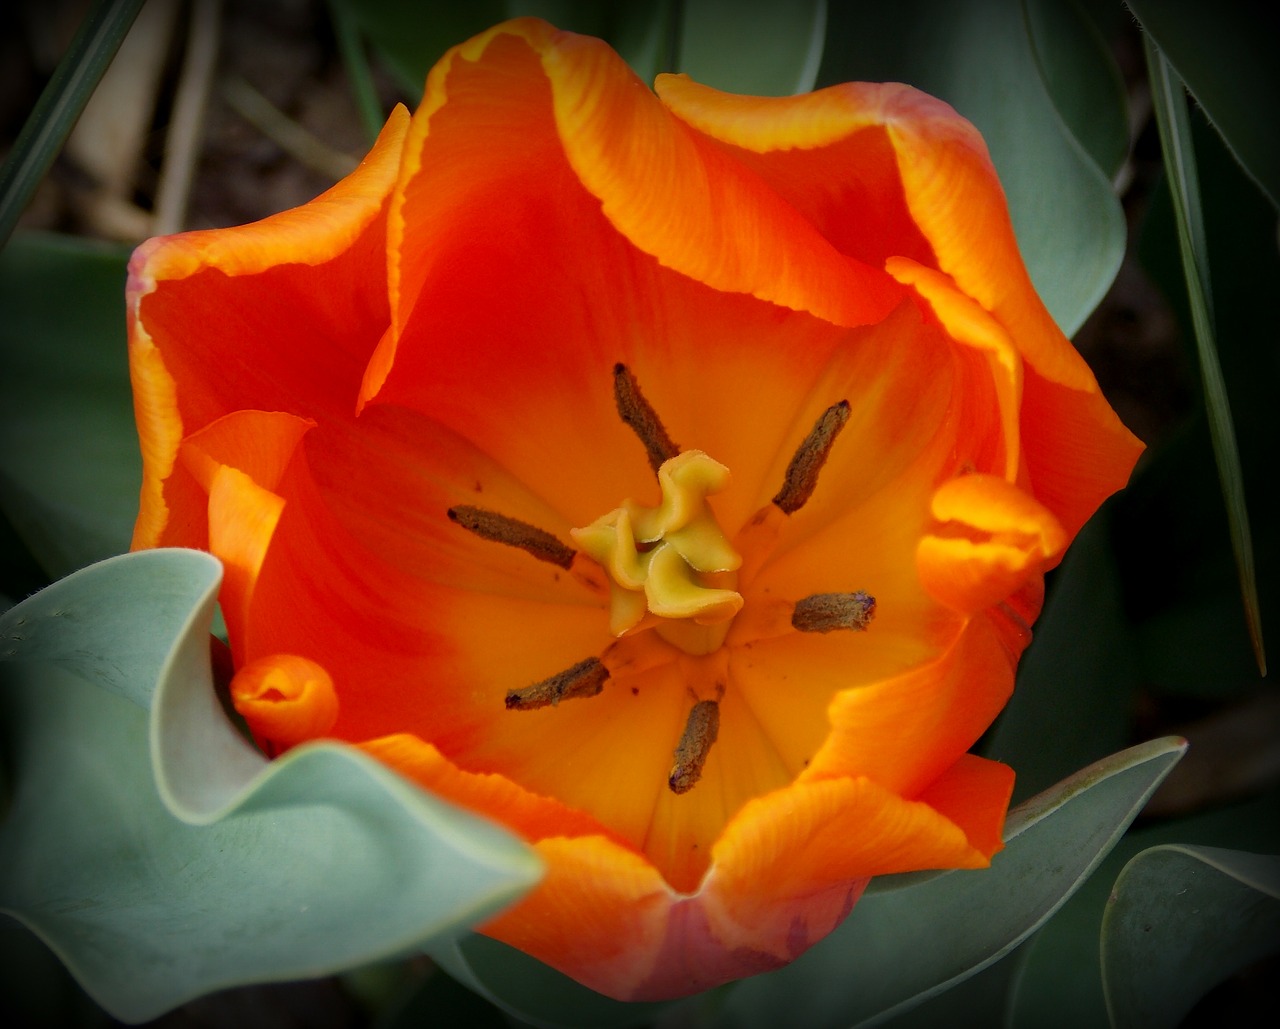 Tulips,spring,spring flowers,orange,garden - free image from needpix.com